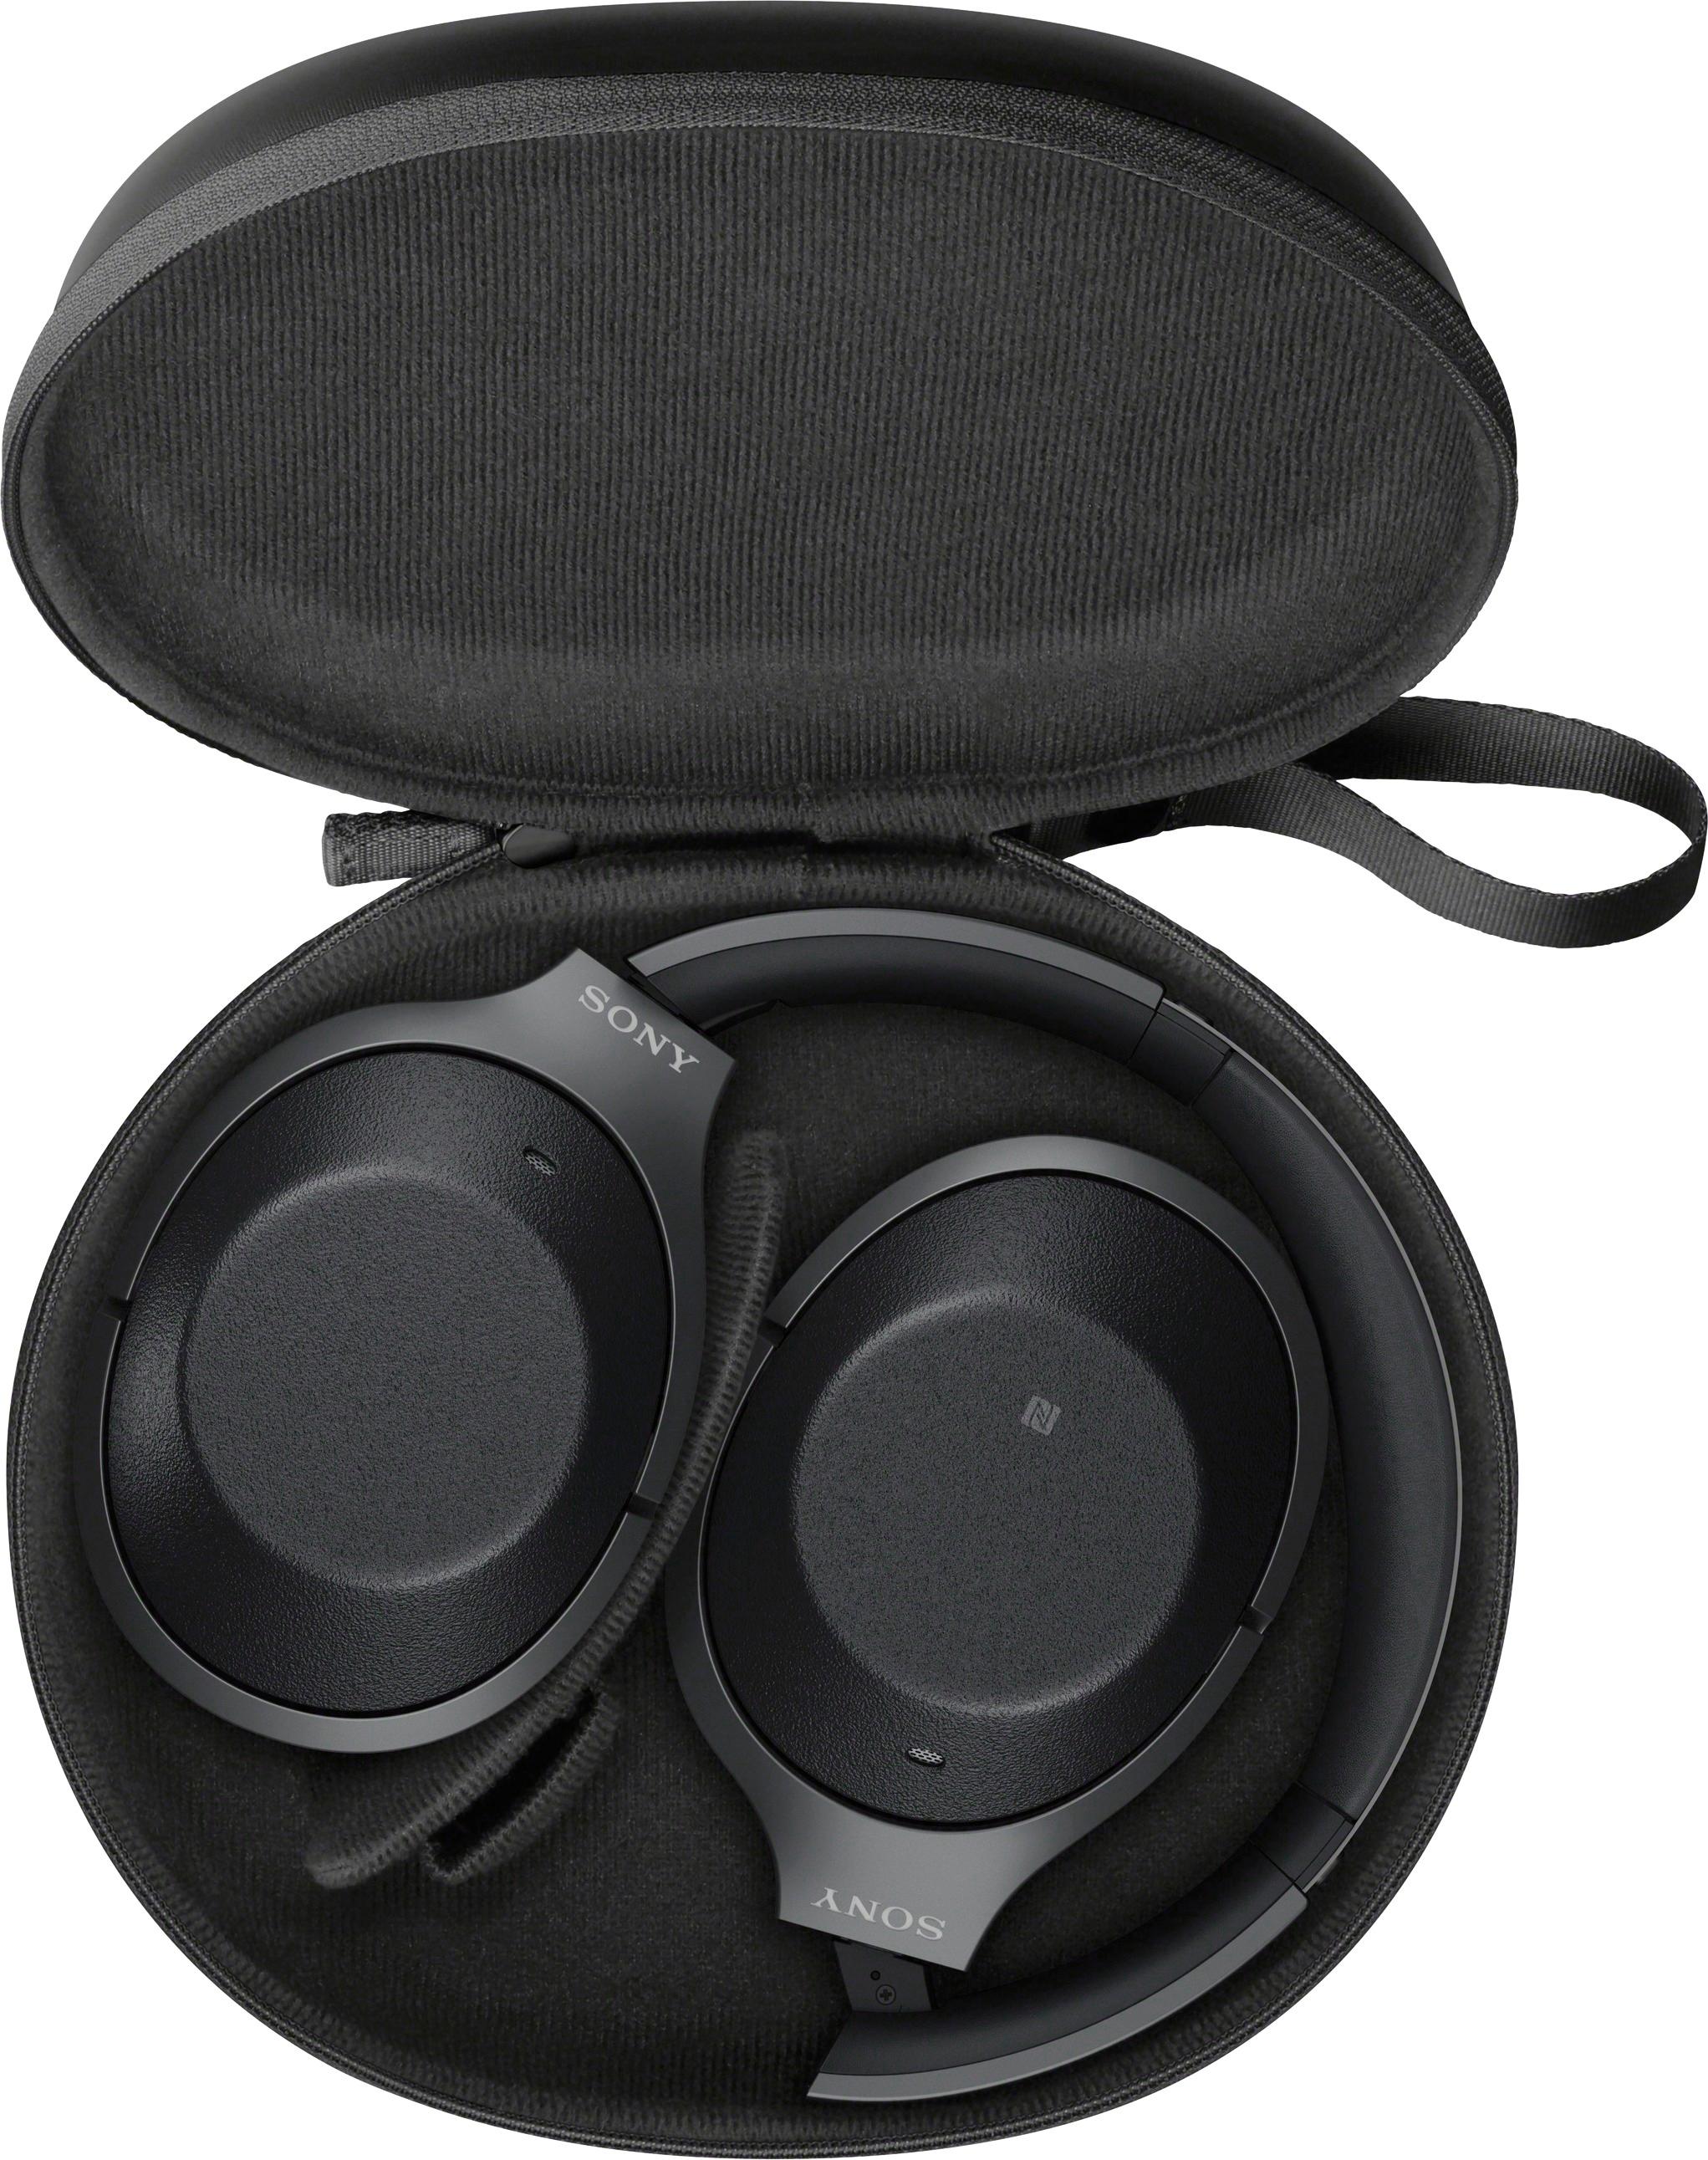 Best Buy: Sony 1000XM2 Premium Wireless Noise Cancelling